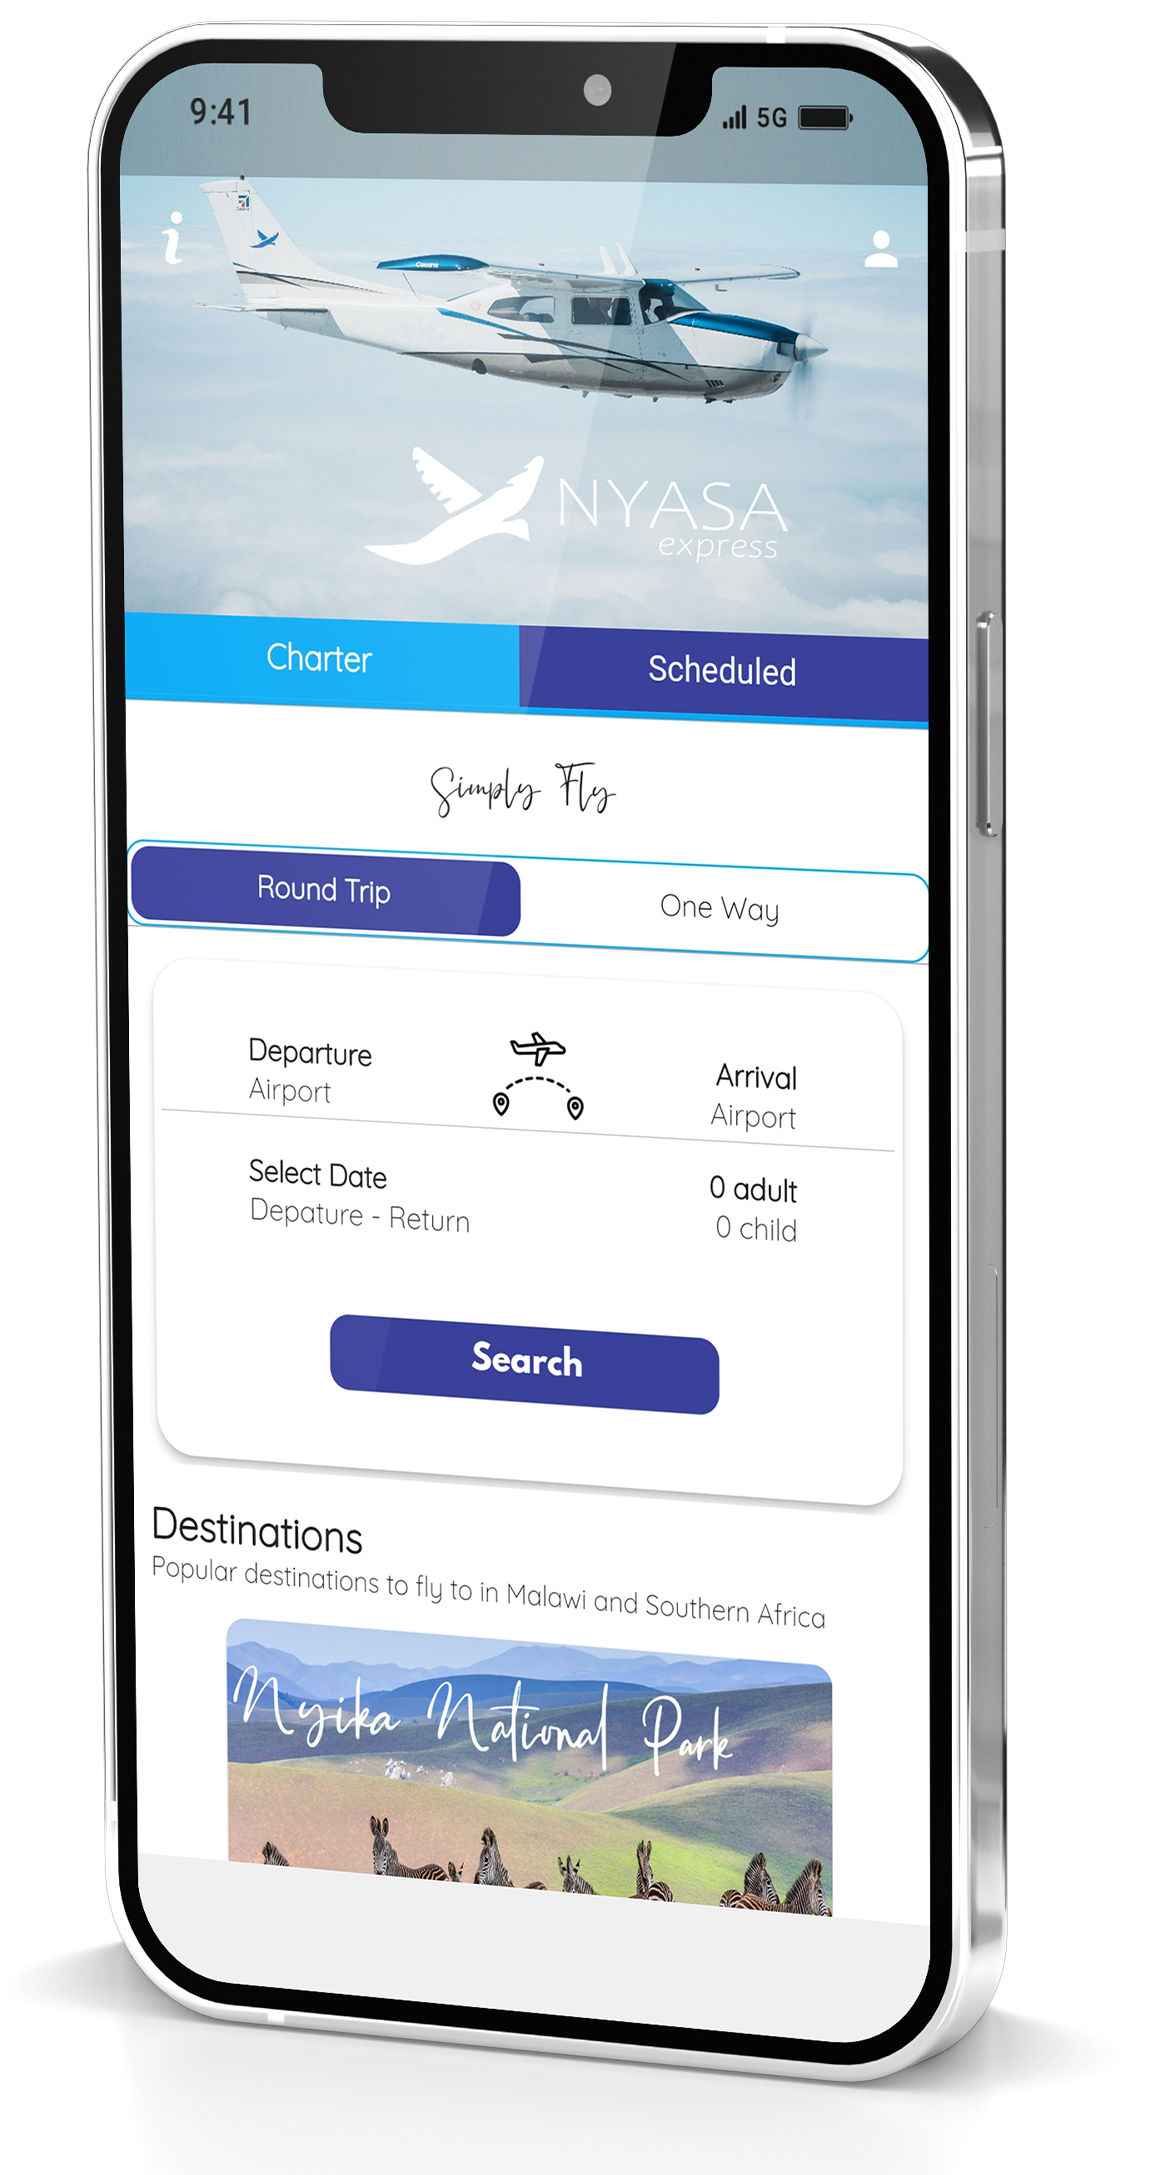 Flynyasa App home screen displayed on an iPhone